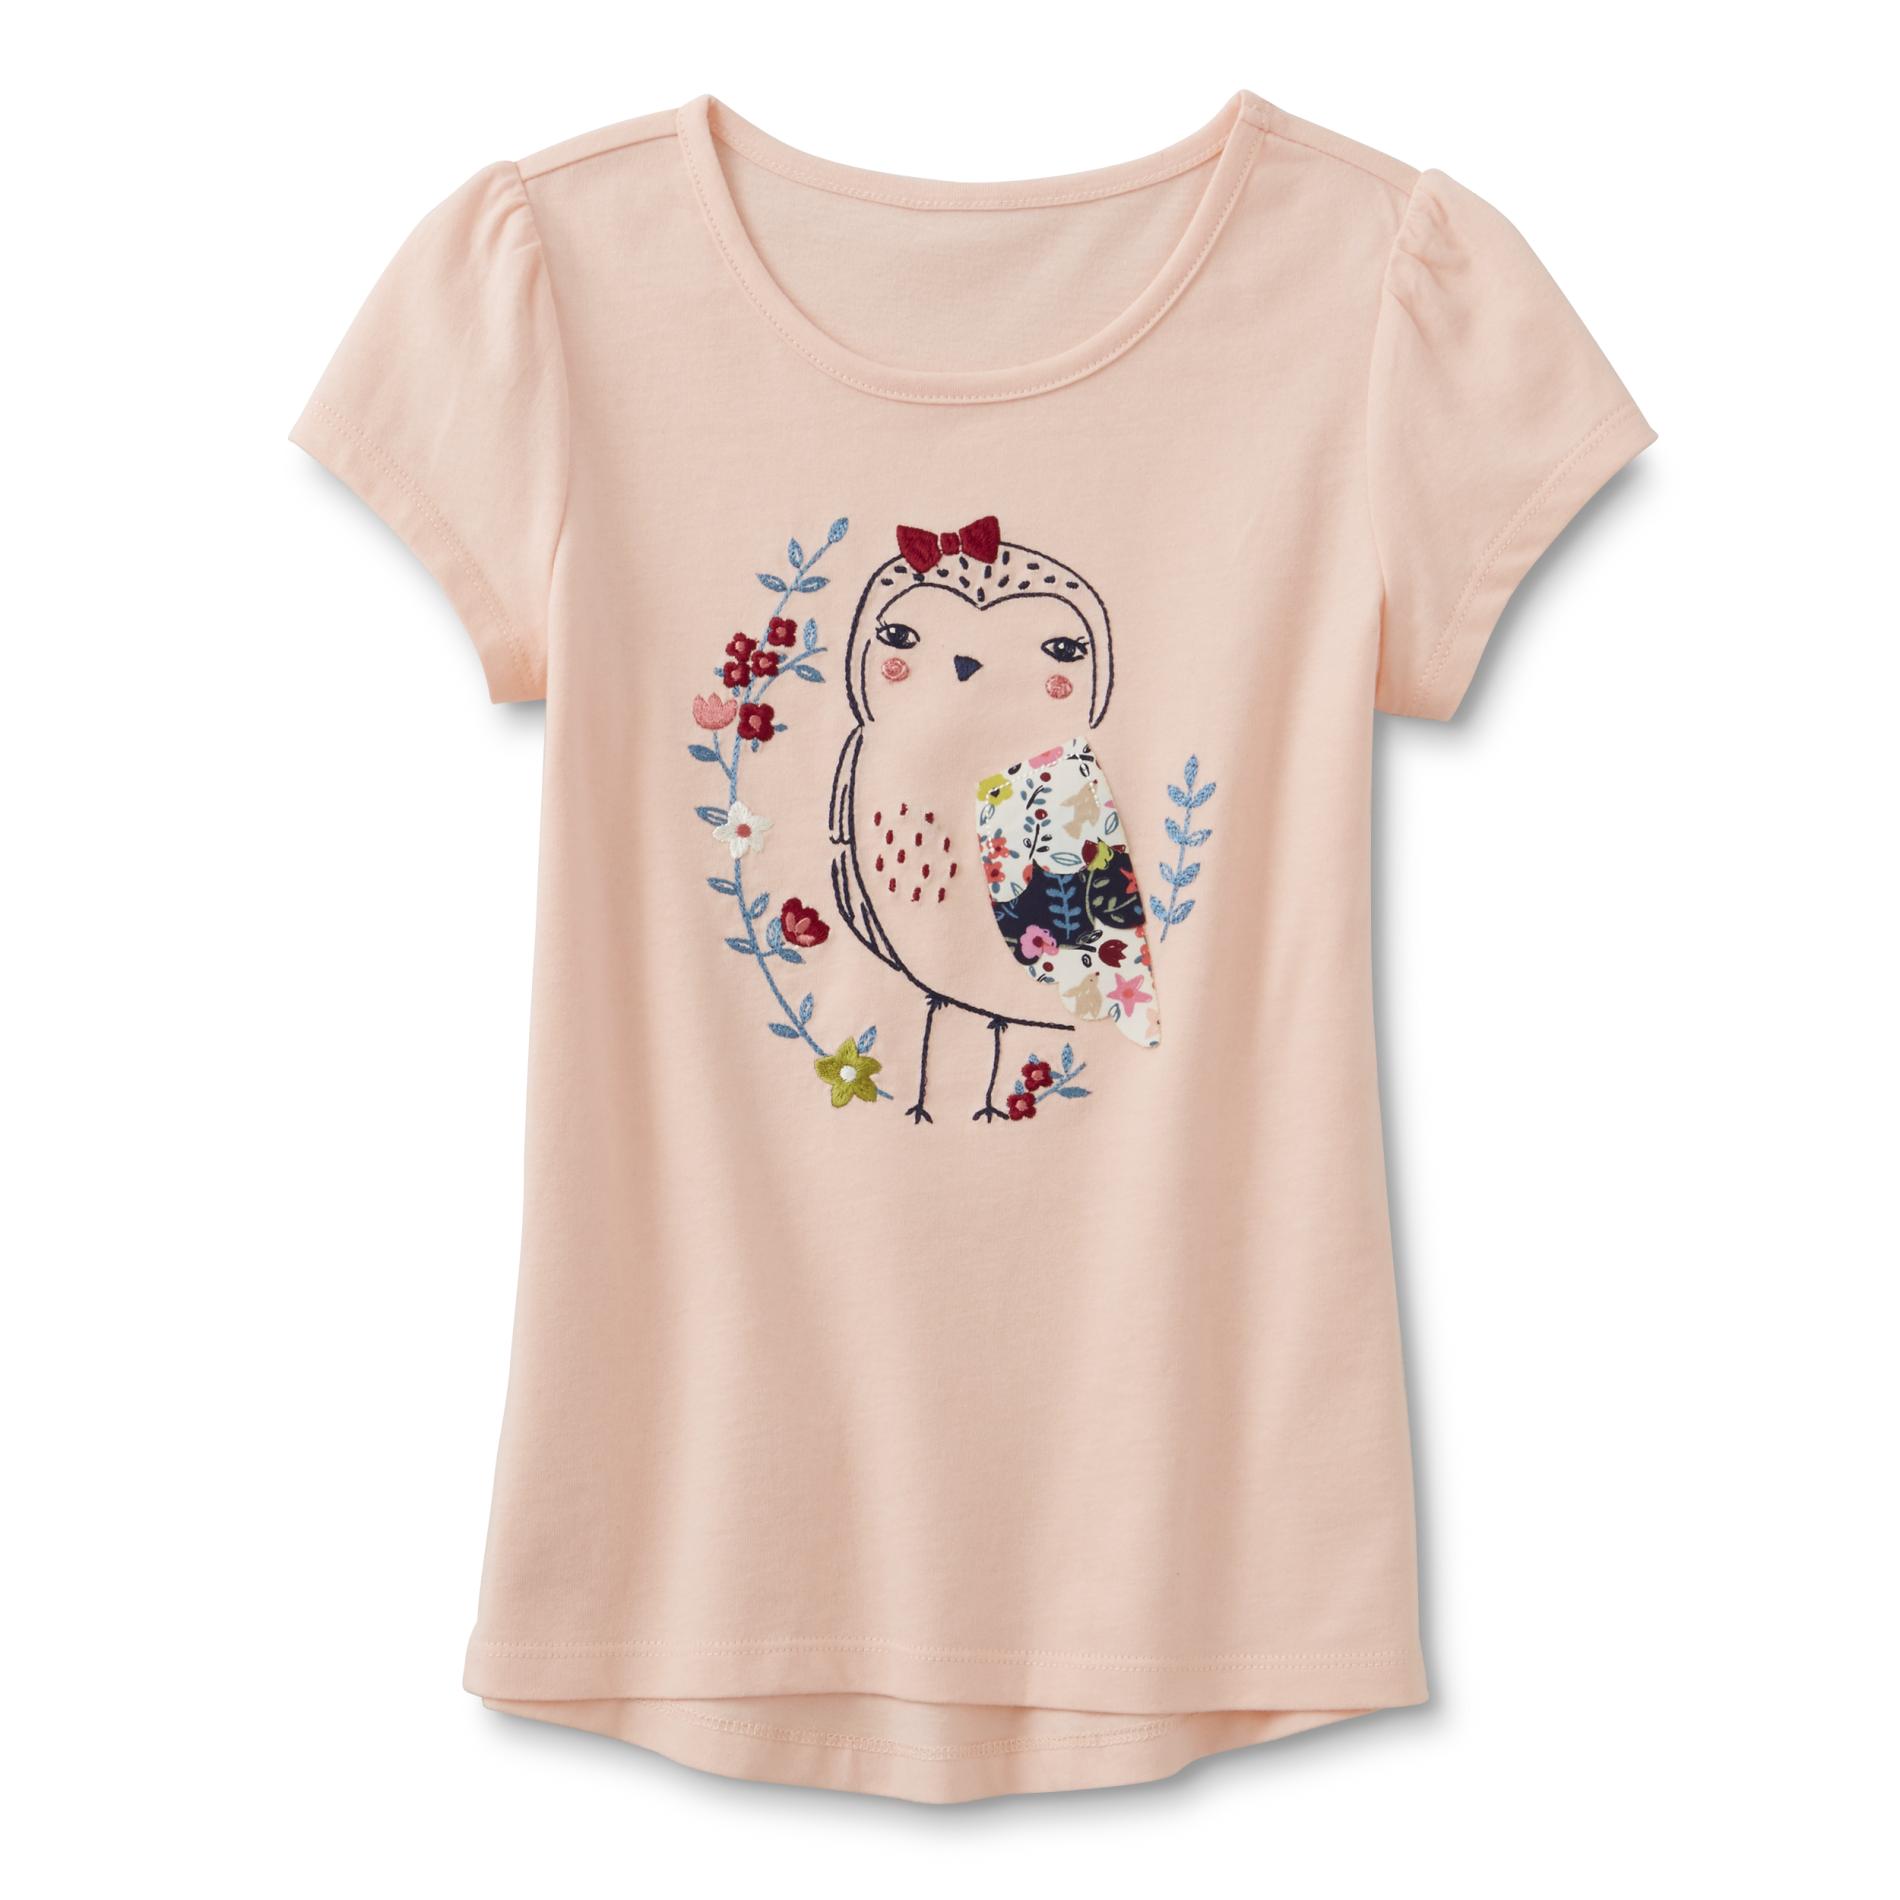 Toughskins Girl's Embellished T-Shirt - Owl